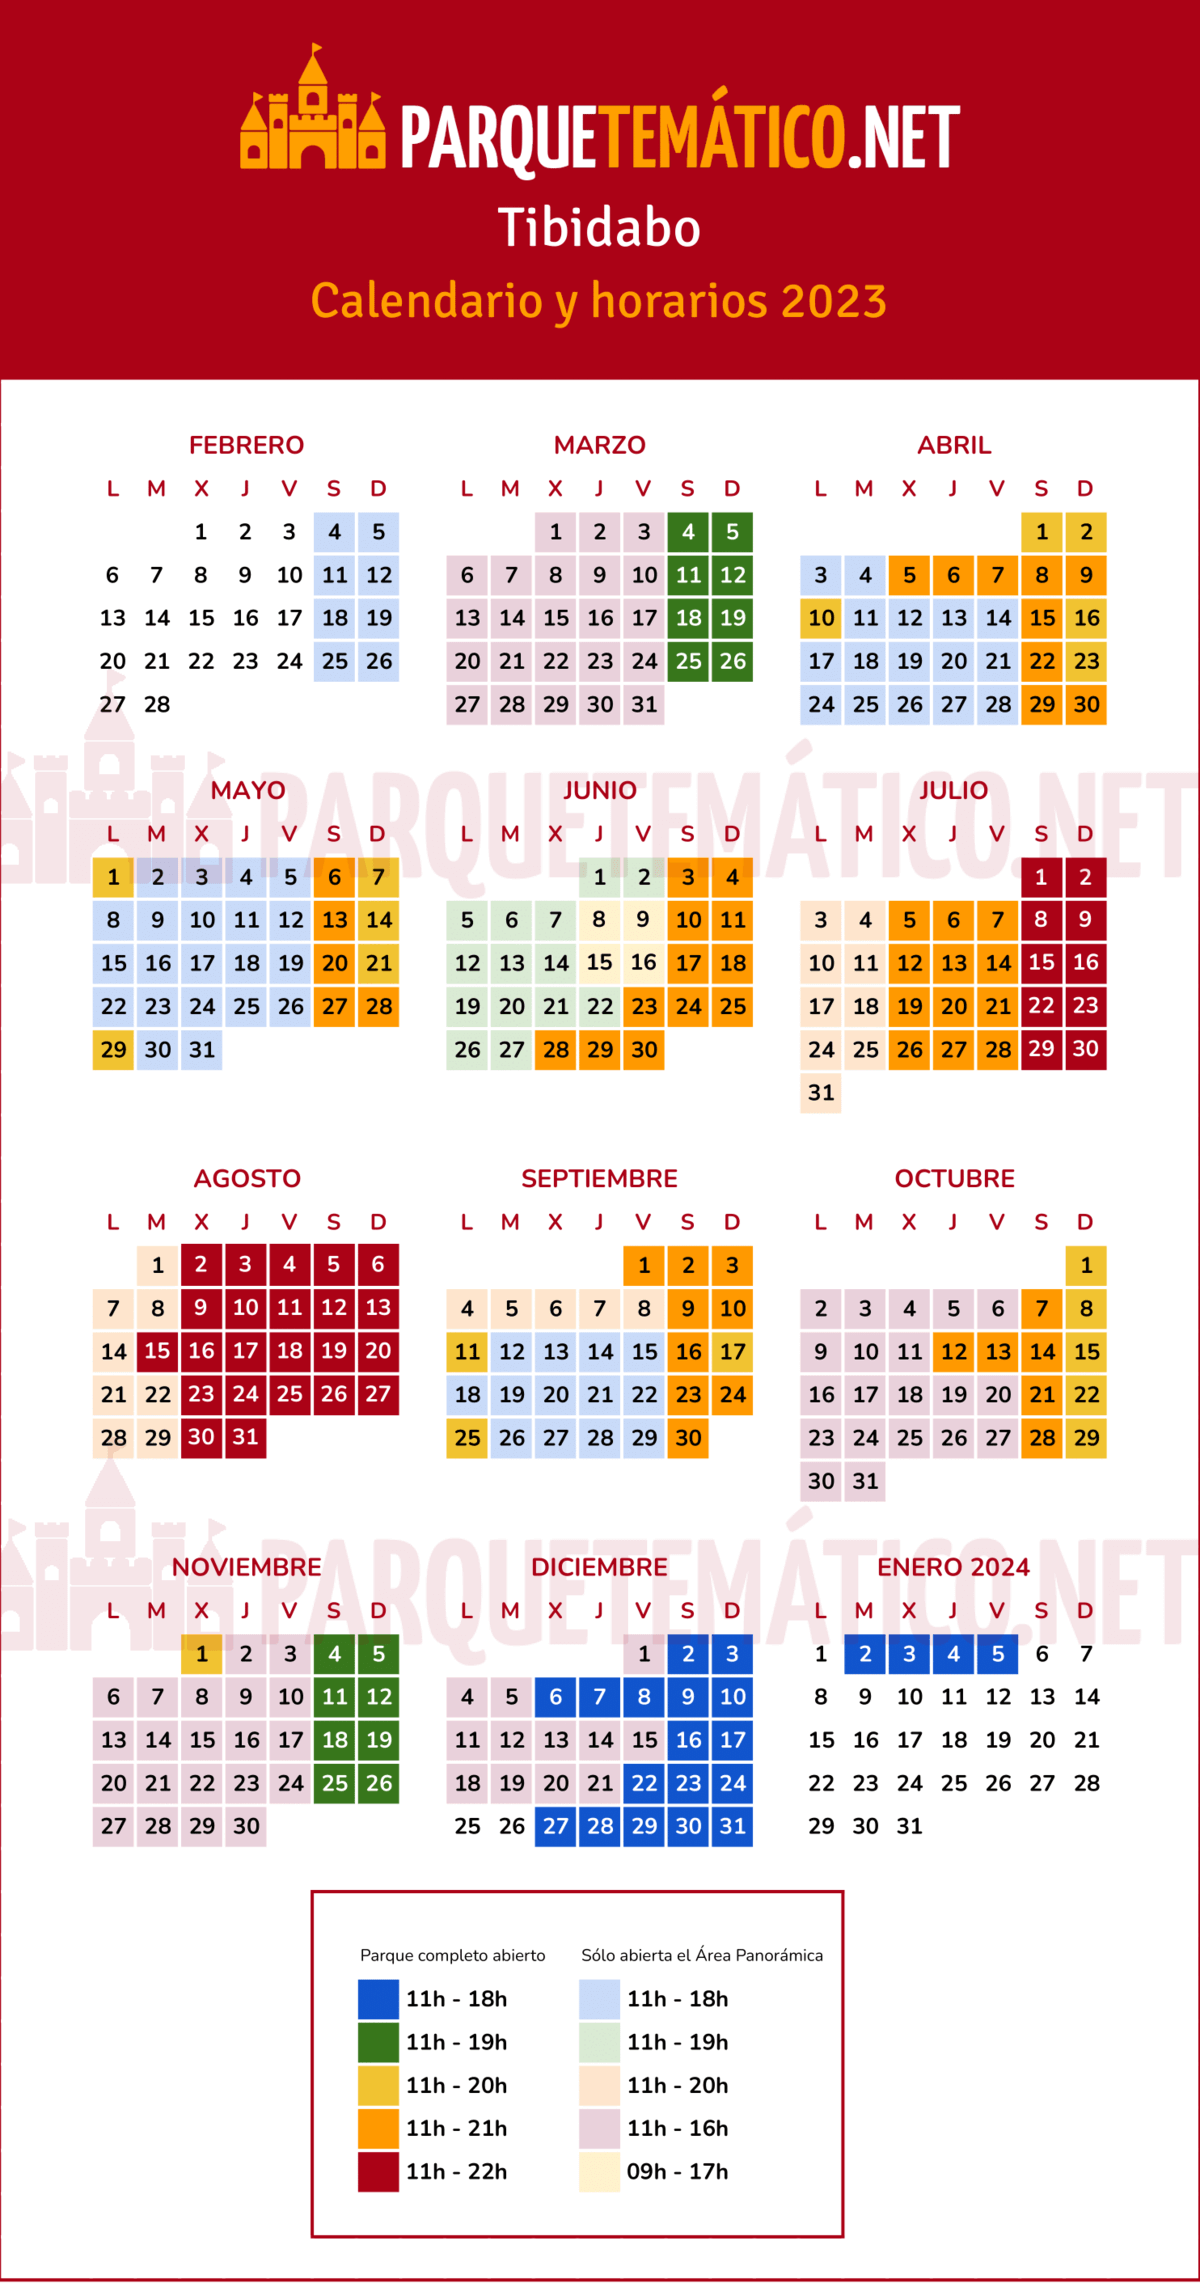 Calendario y horarios de Tibidabo 2023